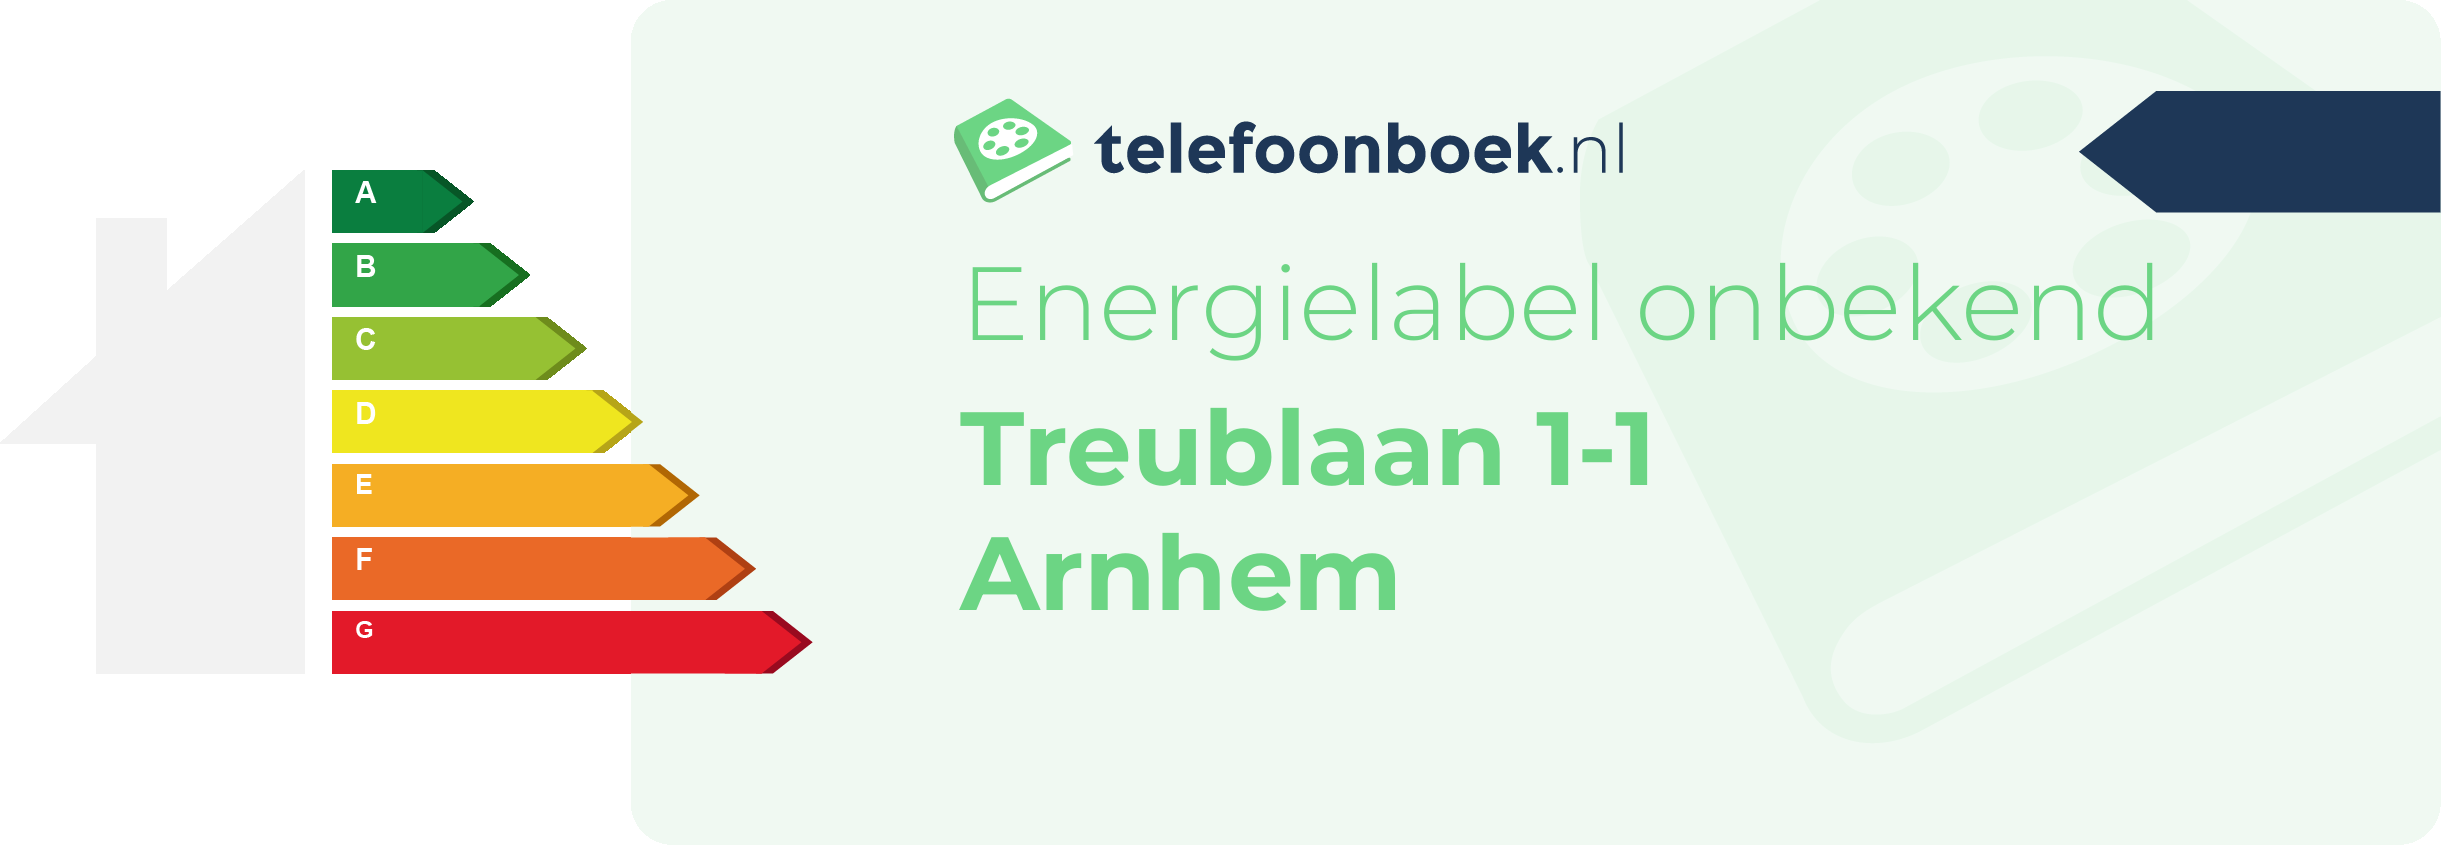 Energielabel Treublaan 1-1 Arnhem